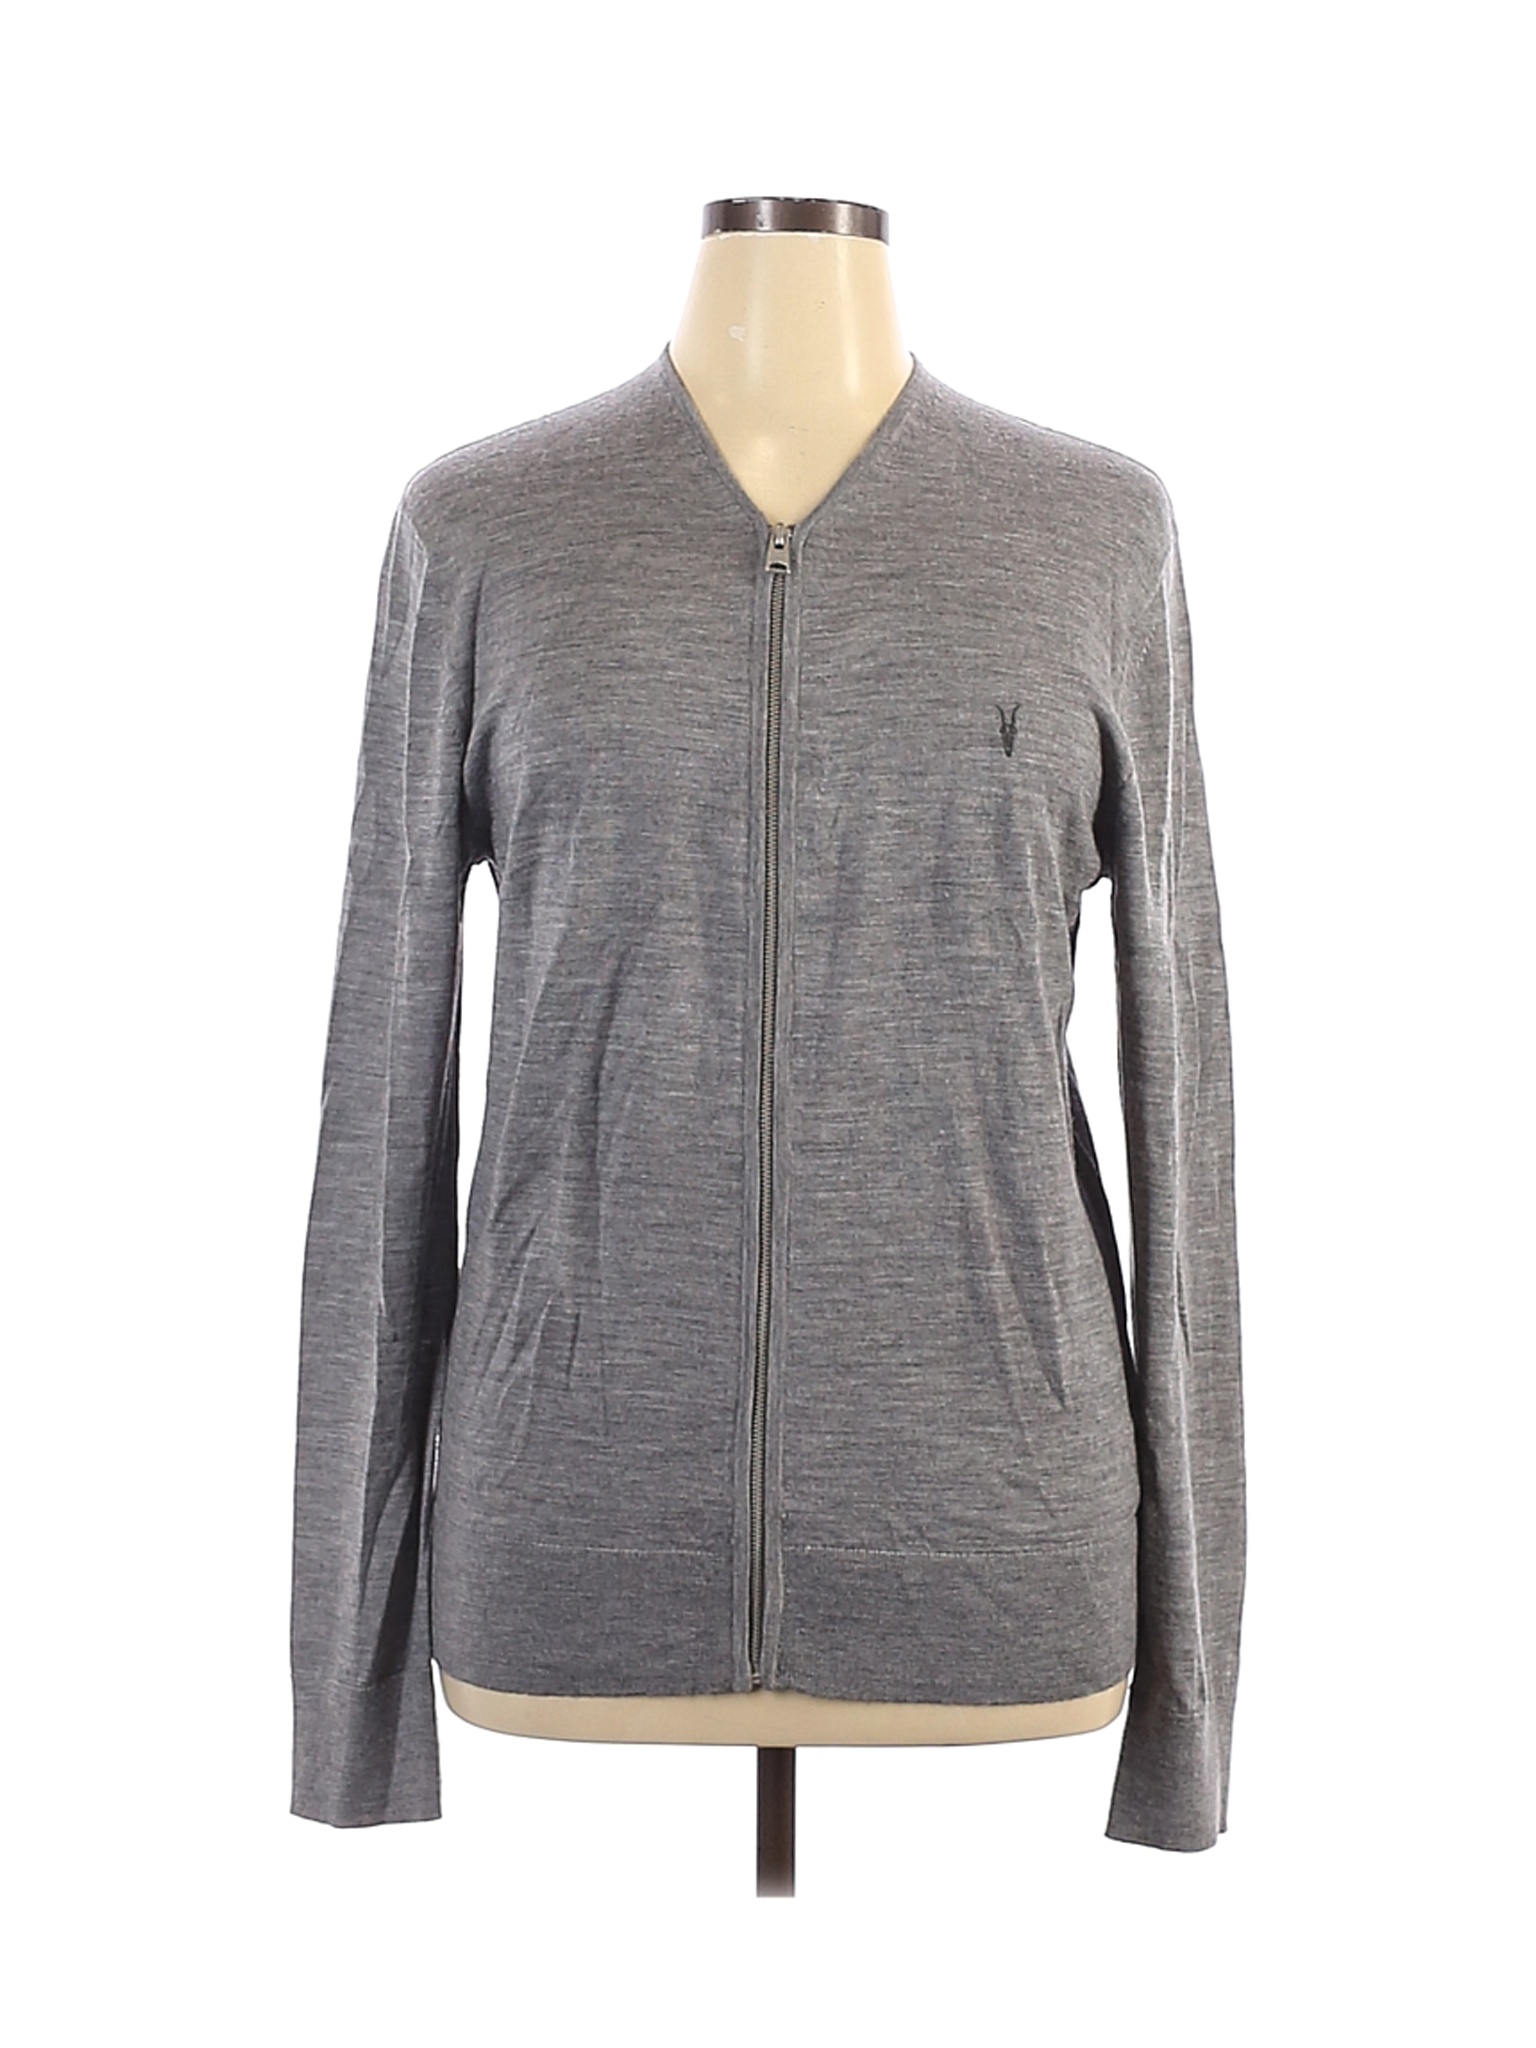 ALLSAINTS Women Gray Wool Cardigan XL | eBay